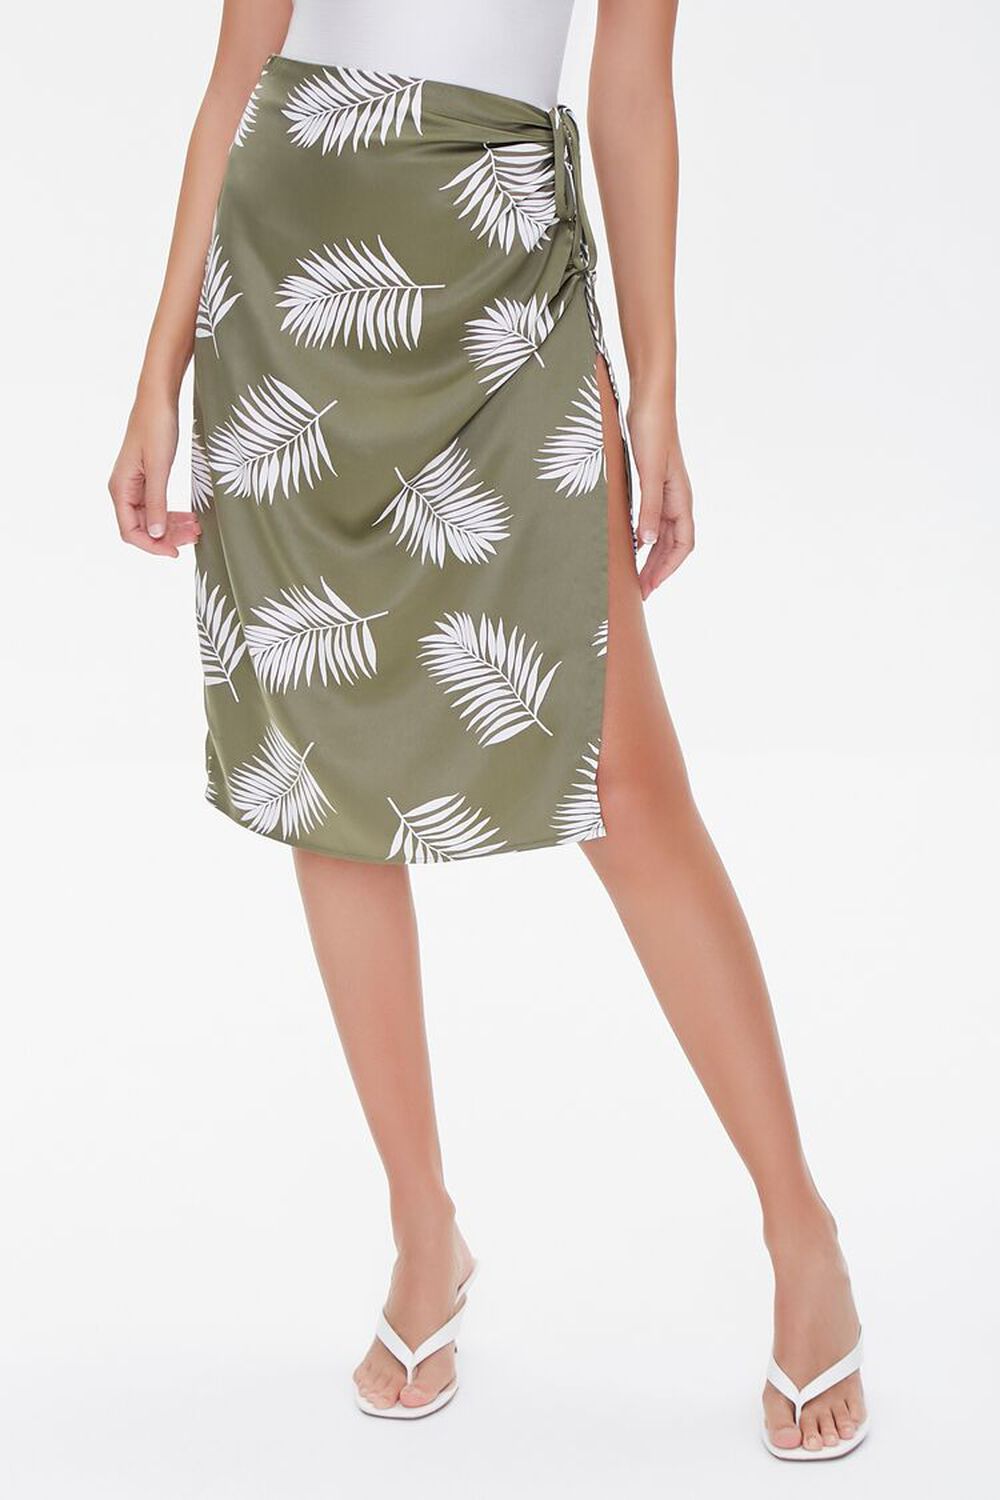 OLIVE/WHITE Tropical Leaf Print Skirt, image 2